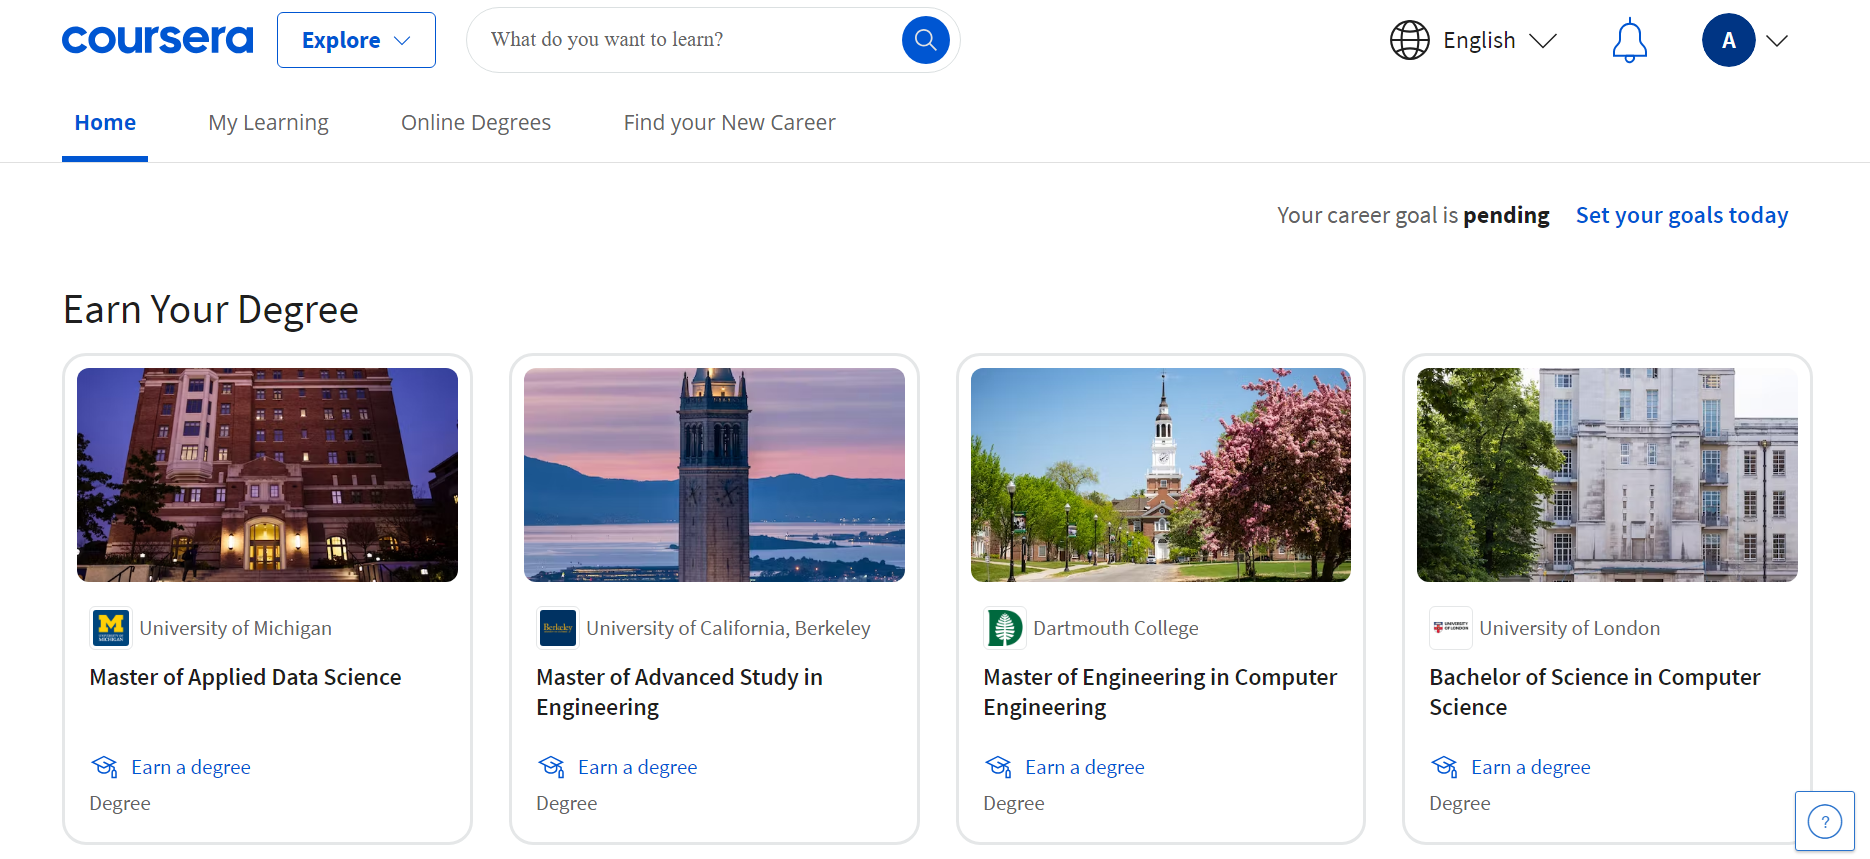 Coursera eLearning platform interface